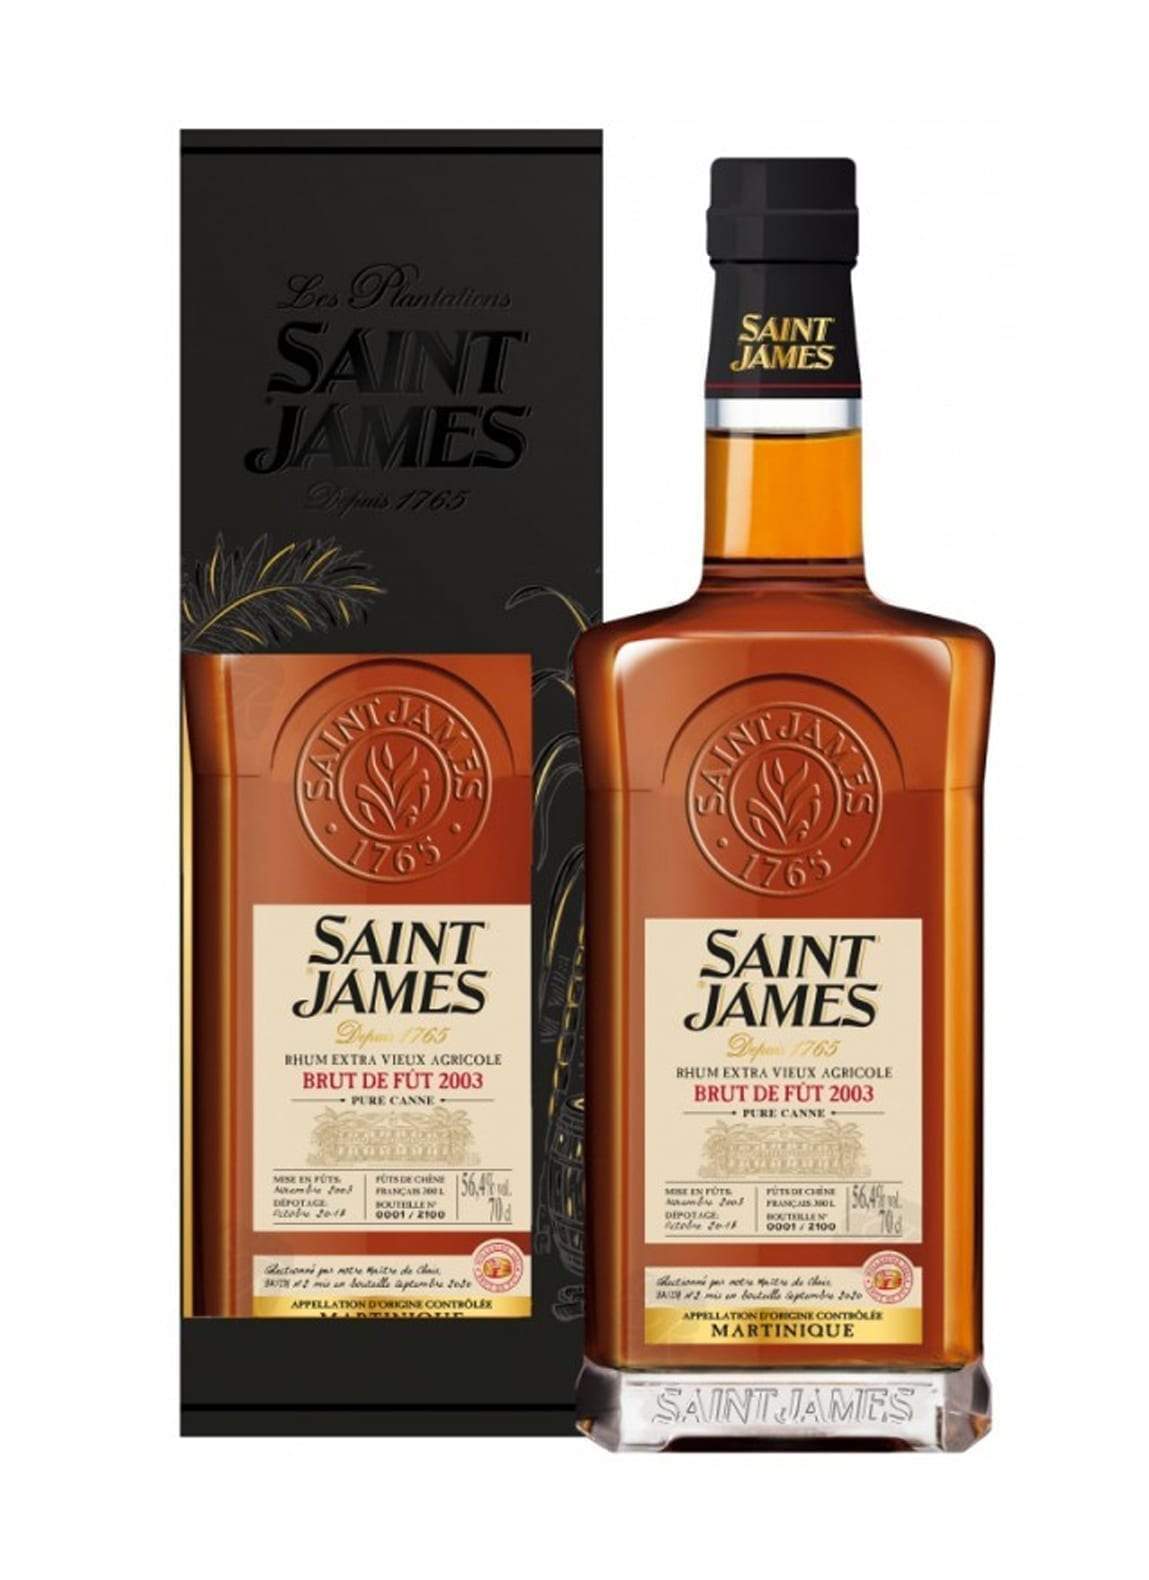 St James Rum Vieux Agricole Single Cask 2003 56.4% 700ml | Rum | Shop online at Spirits of France